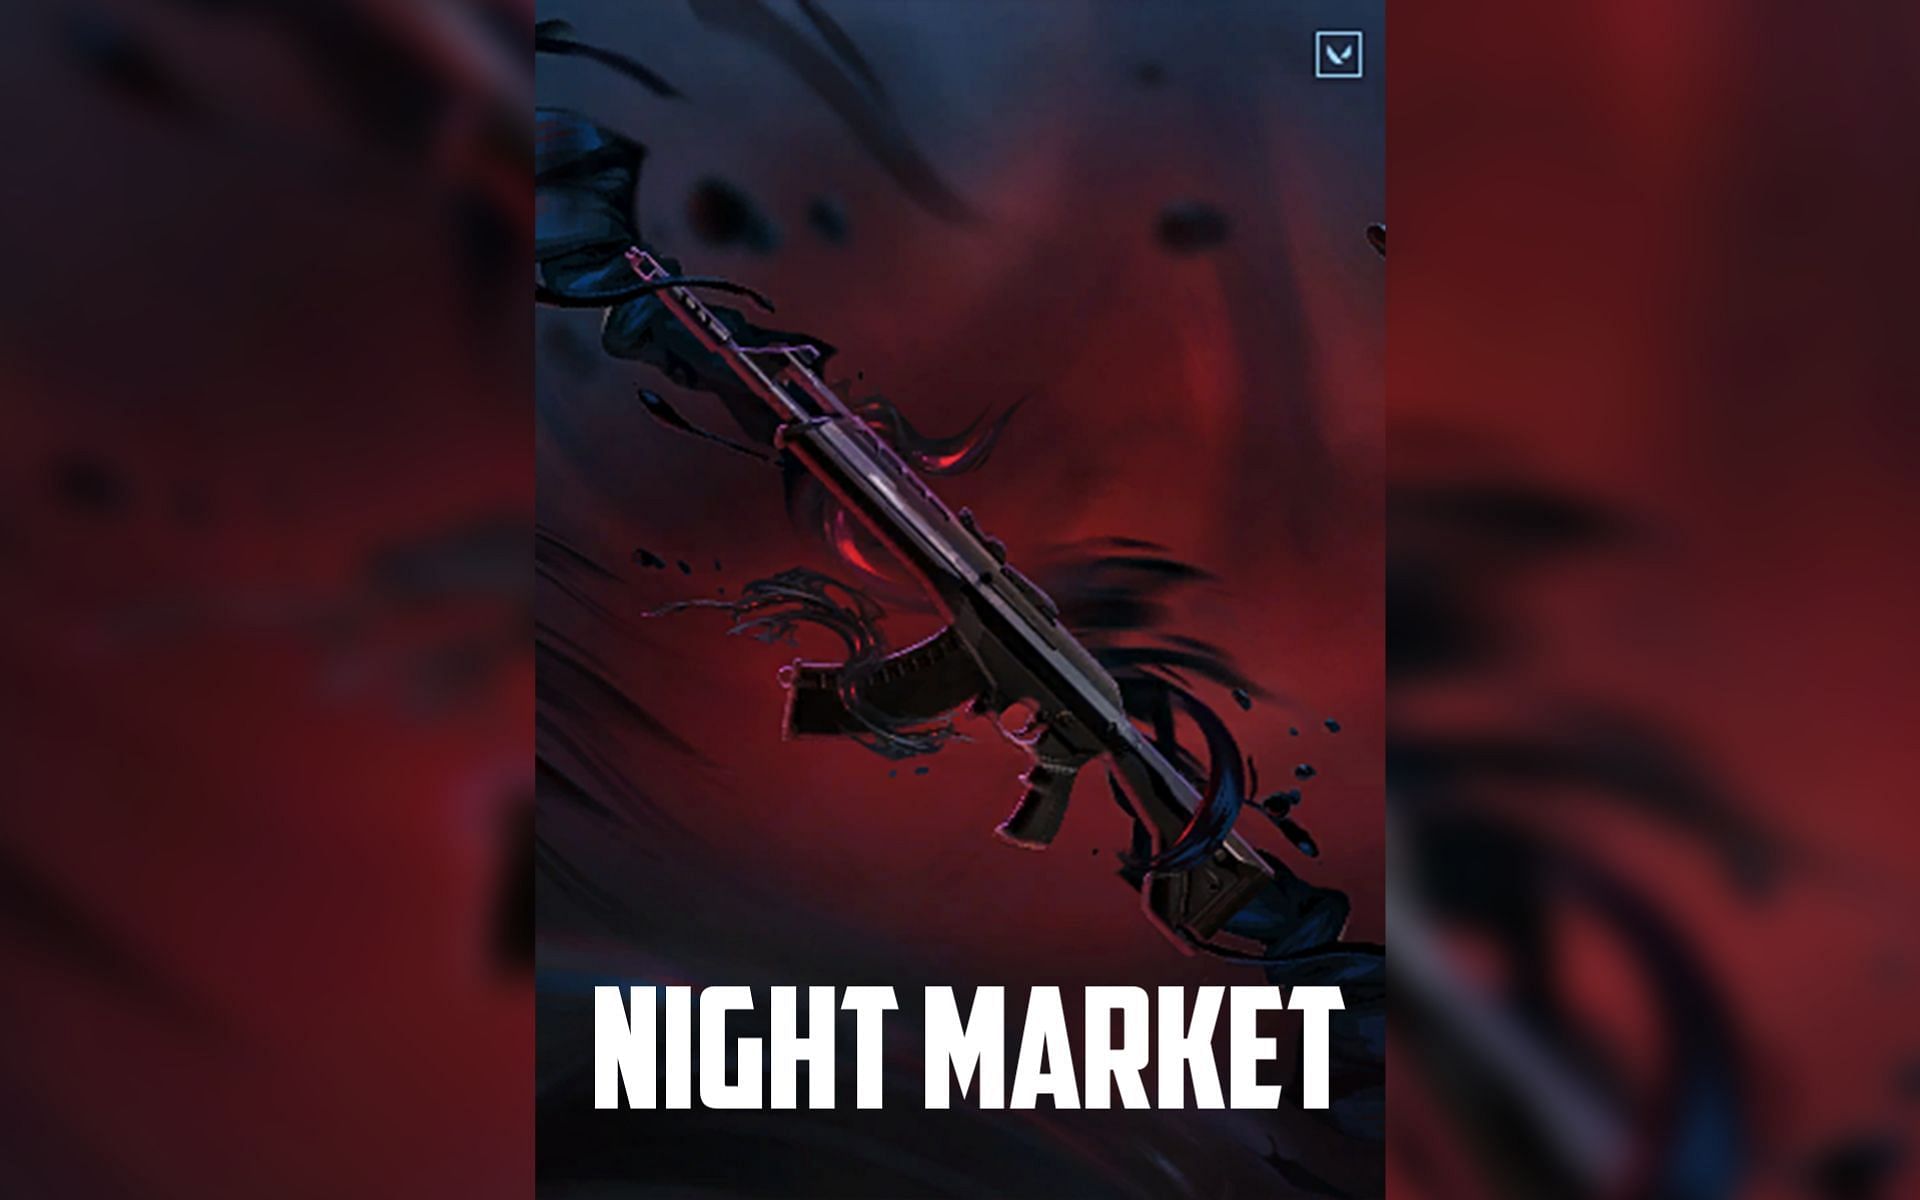 Valorant Episode 4 Act 2 Night Market coming soon (Image via Sportskeeda)